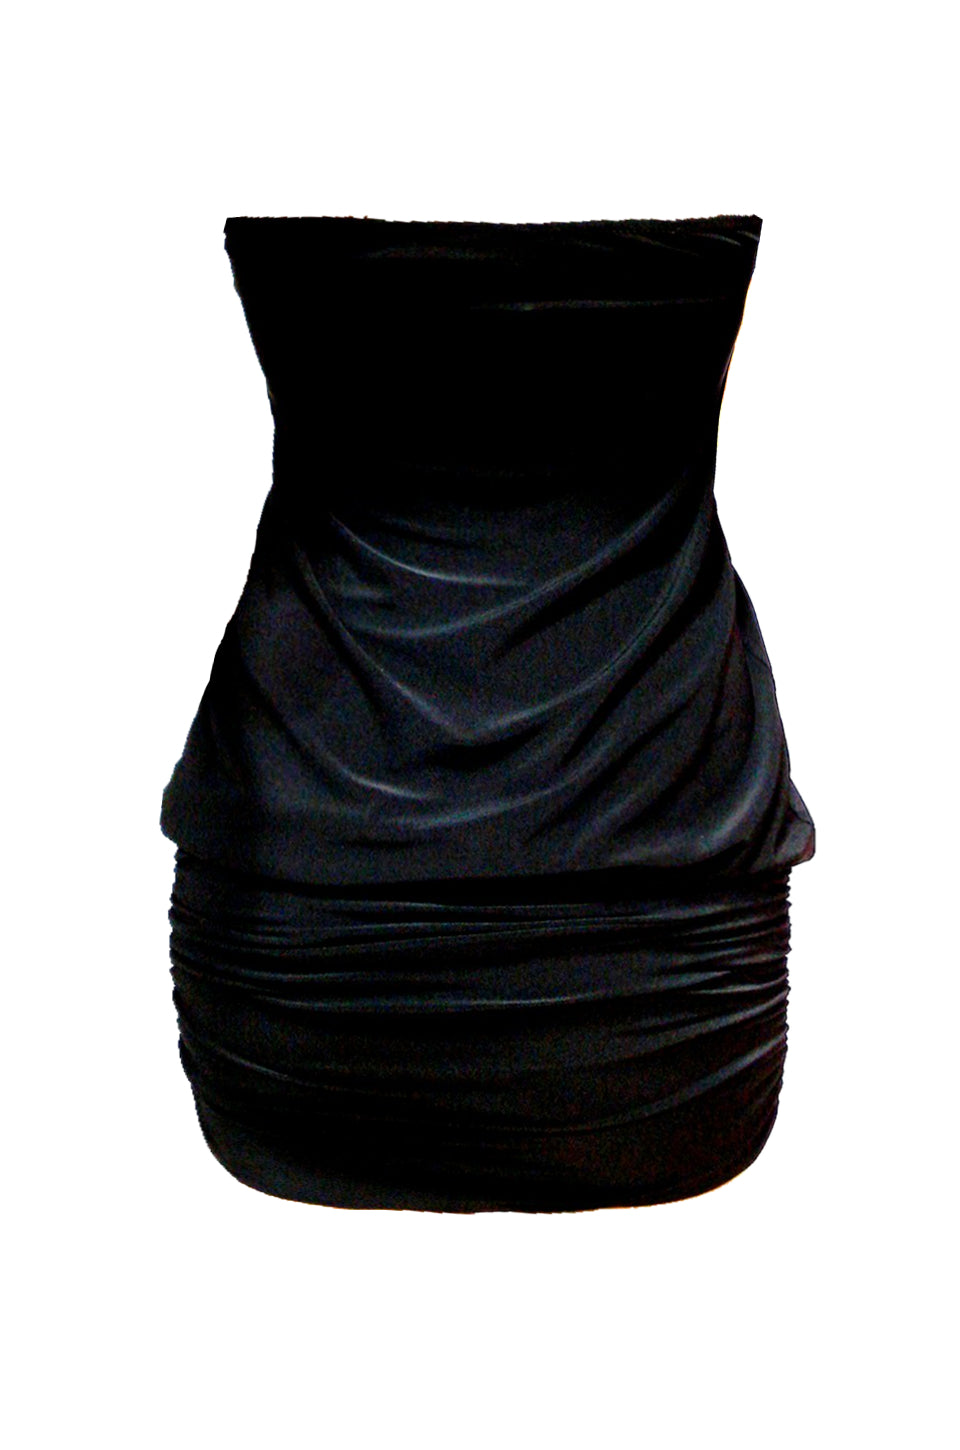 MISS PINKI Amber bandeau party mini dress in slinky knit fabric - black